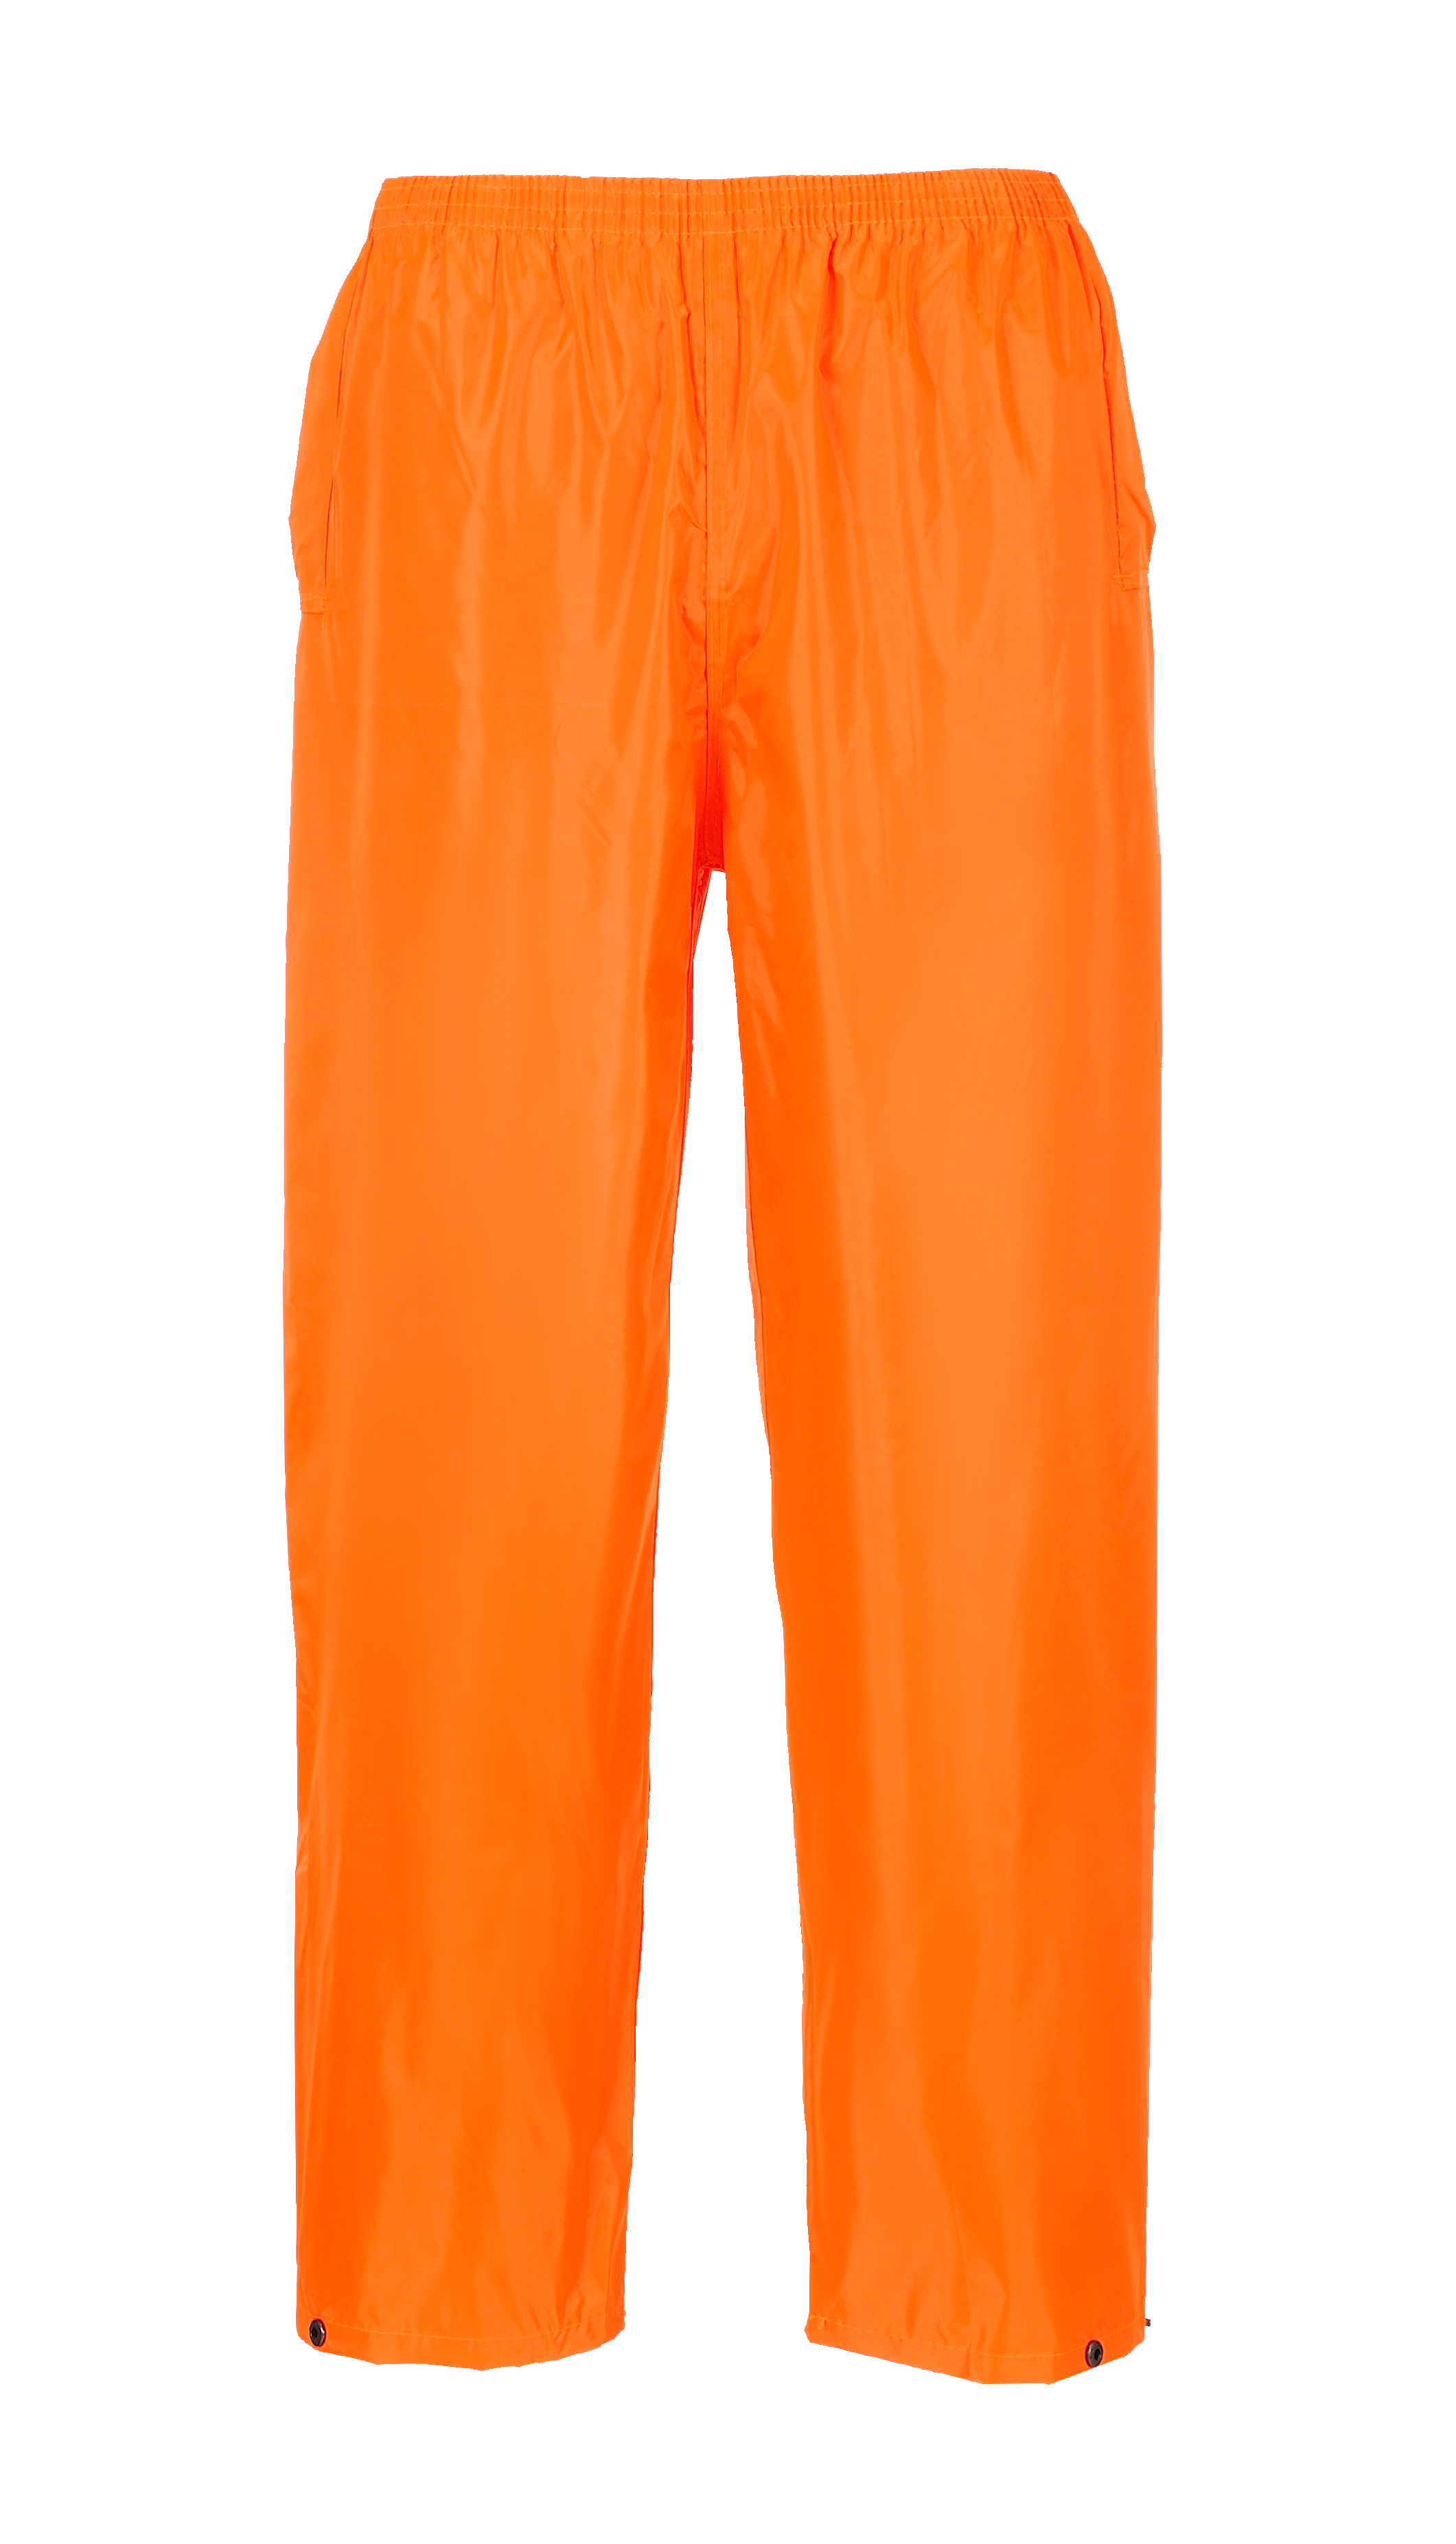 ax-httpss3.eu-west-2.amazonaws.comwebsystemstmp_for_downloadportwest-classic-adult-rain-trousers-orange.jpeg